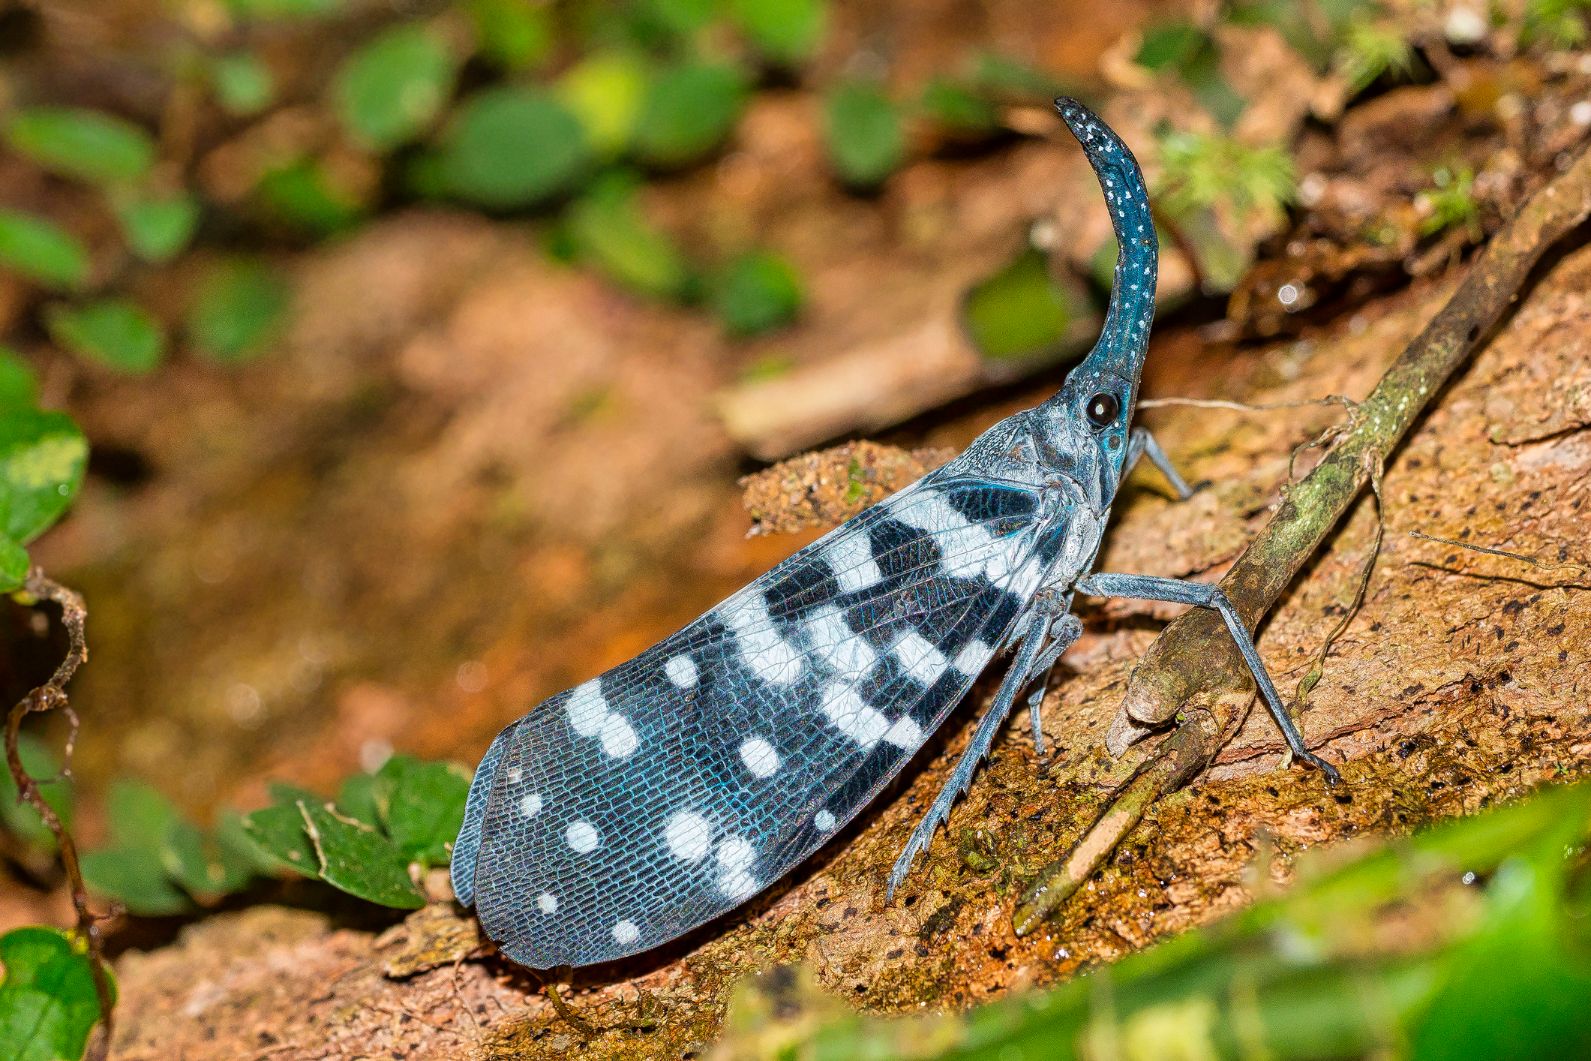 A blue lantern bug, in Sri Lanka's Sinharaja National Park